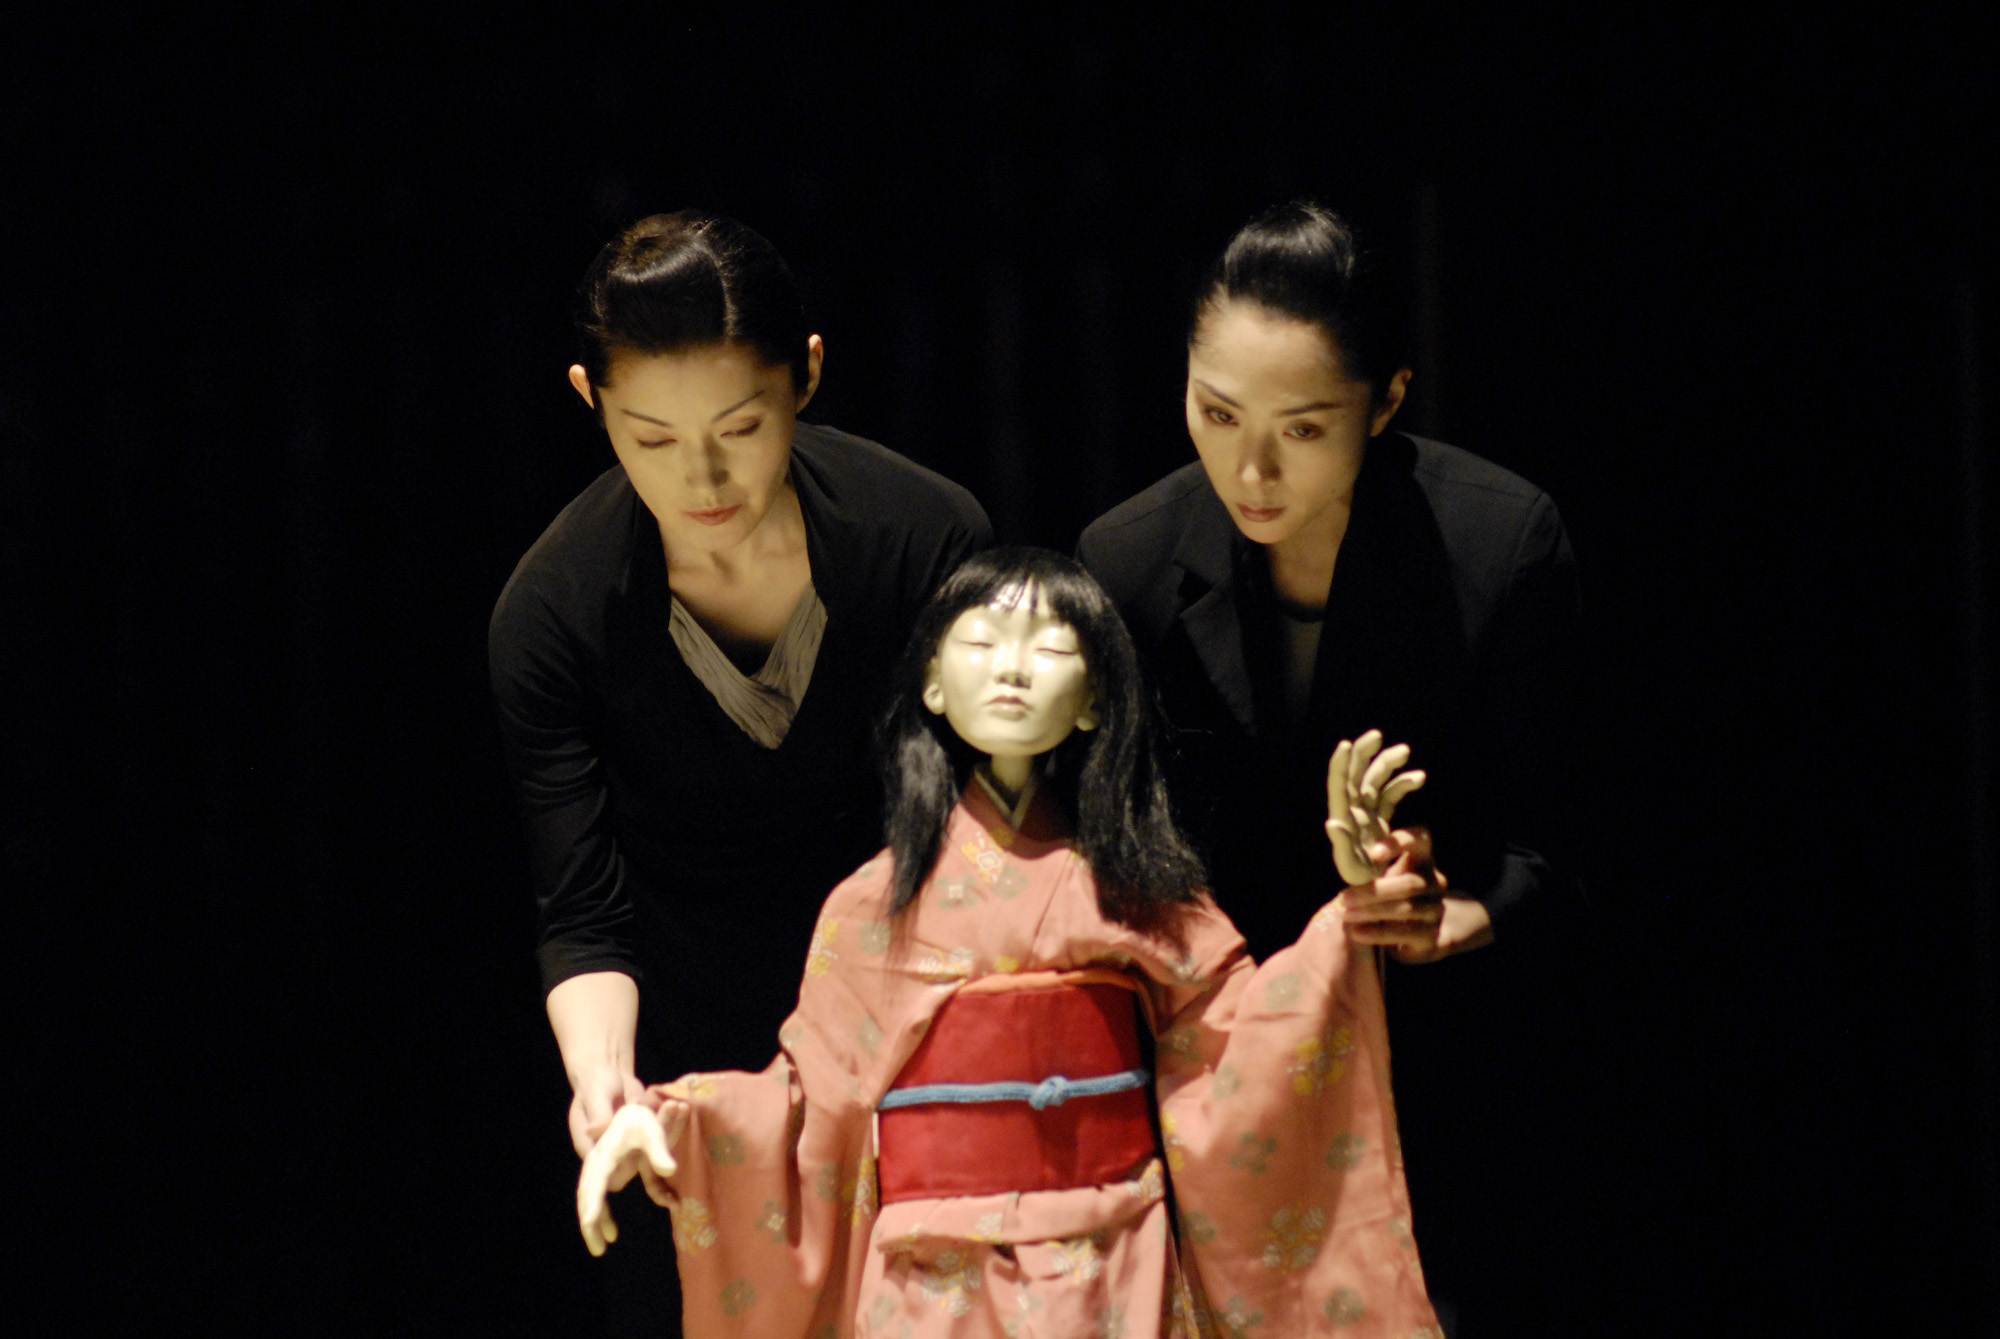 A puppet woman wearing a pink kimono steps forward assertively